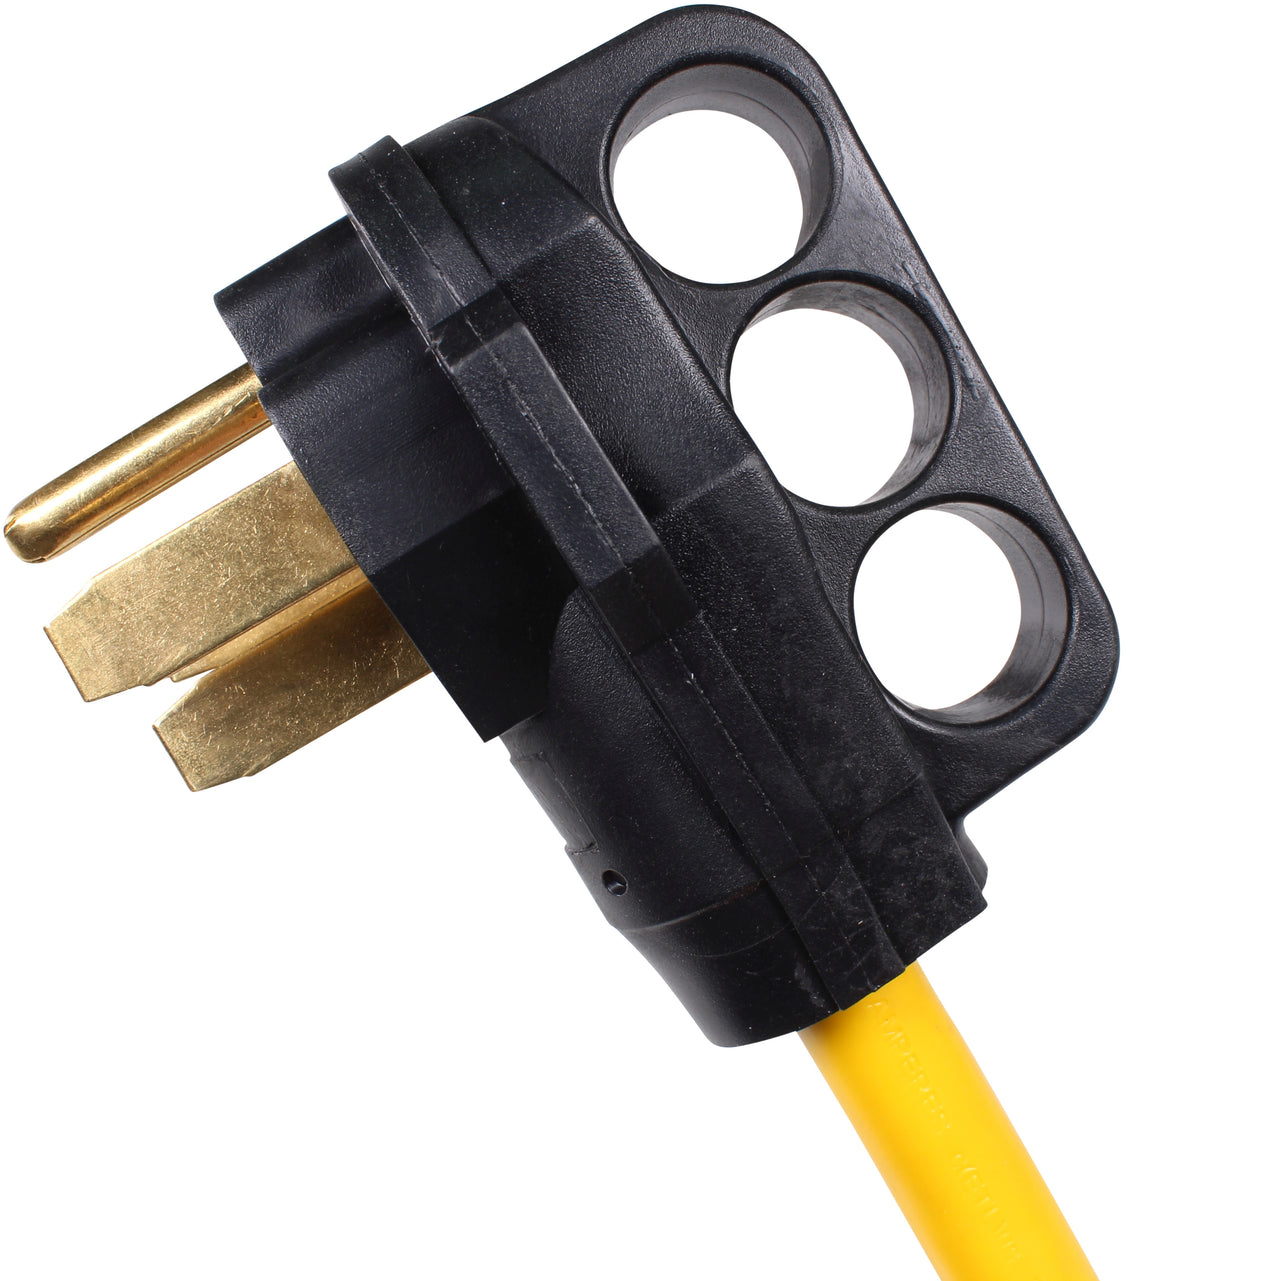 RV 50Amp Male To 30Amp Female Camper Power Cord Plug Adapter Cable NEMA L14-50P to TT-30R (50M/30F)